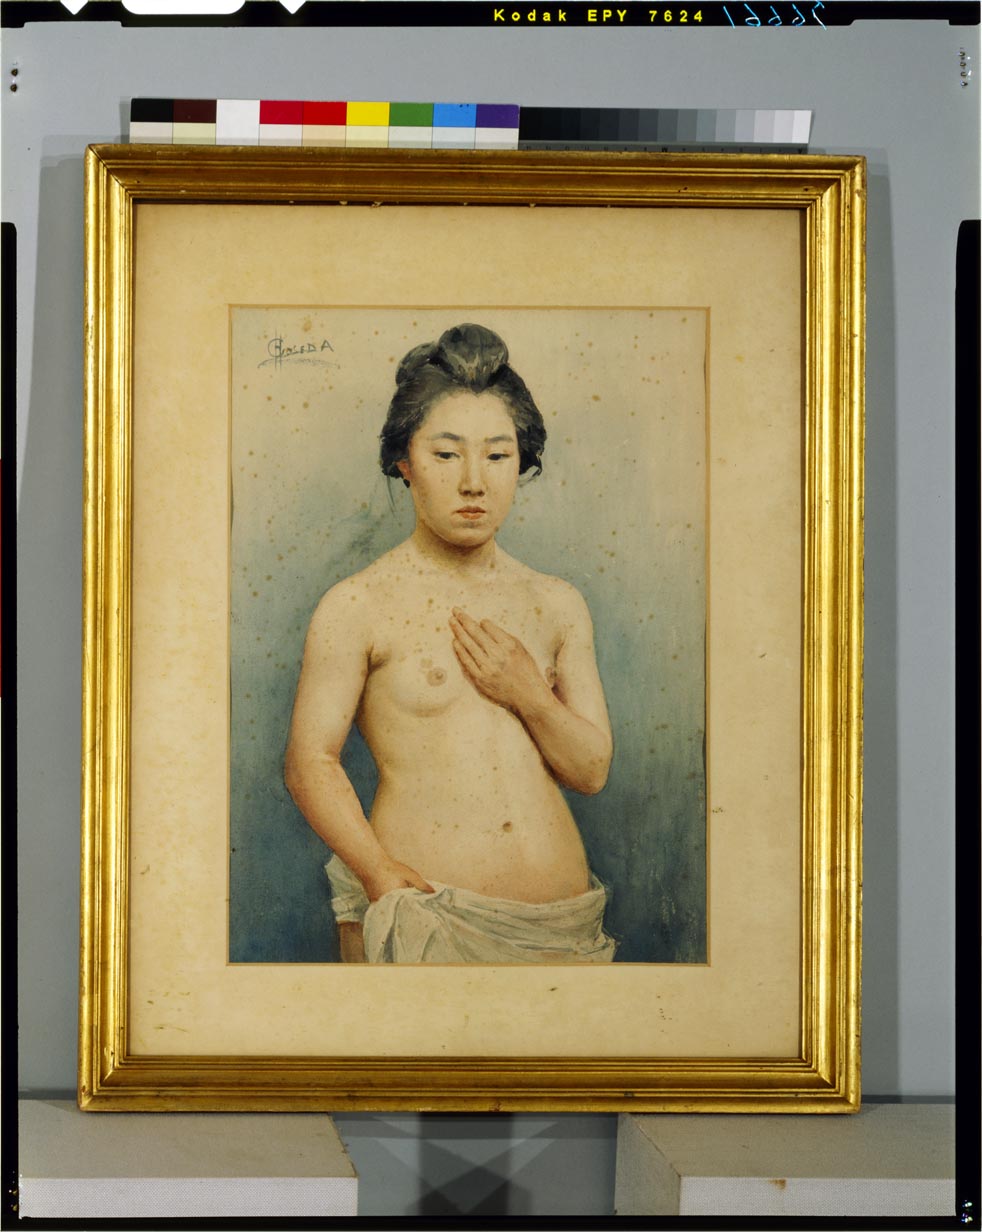 C 裸婦 東京国立博物館 画像検索